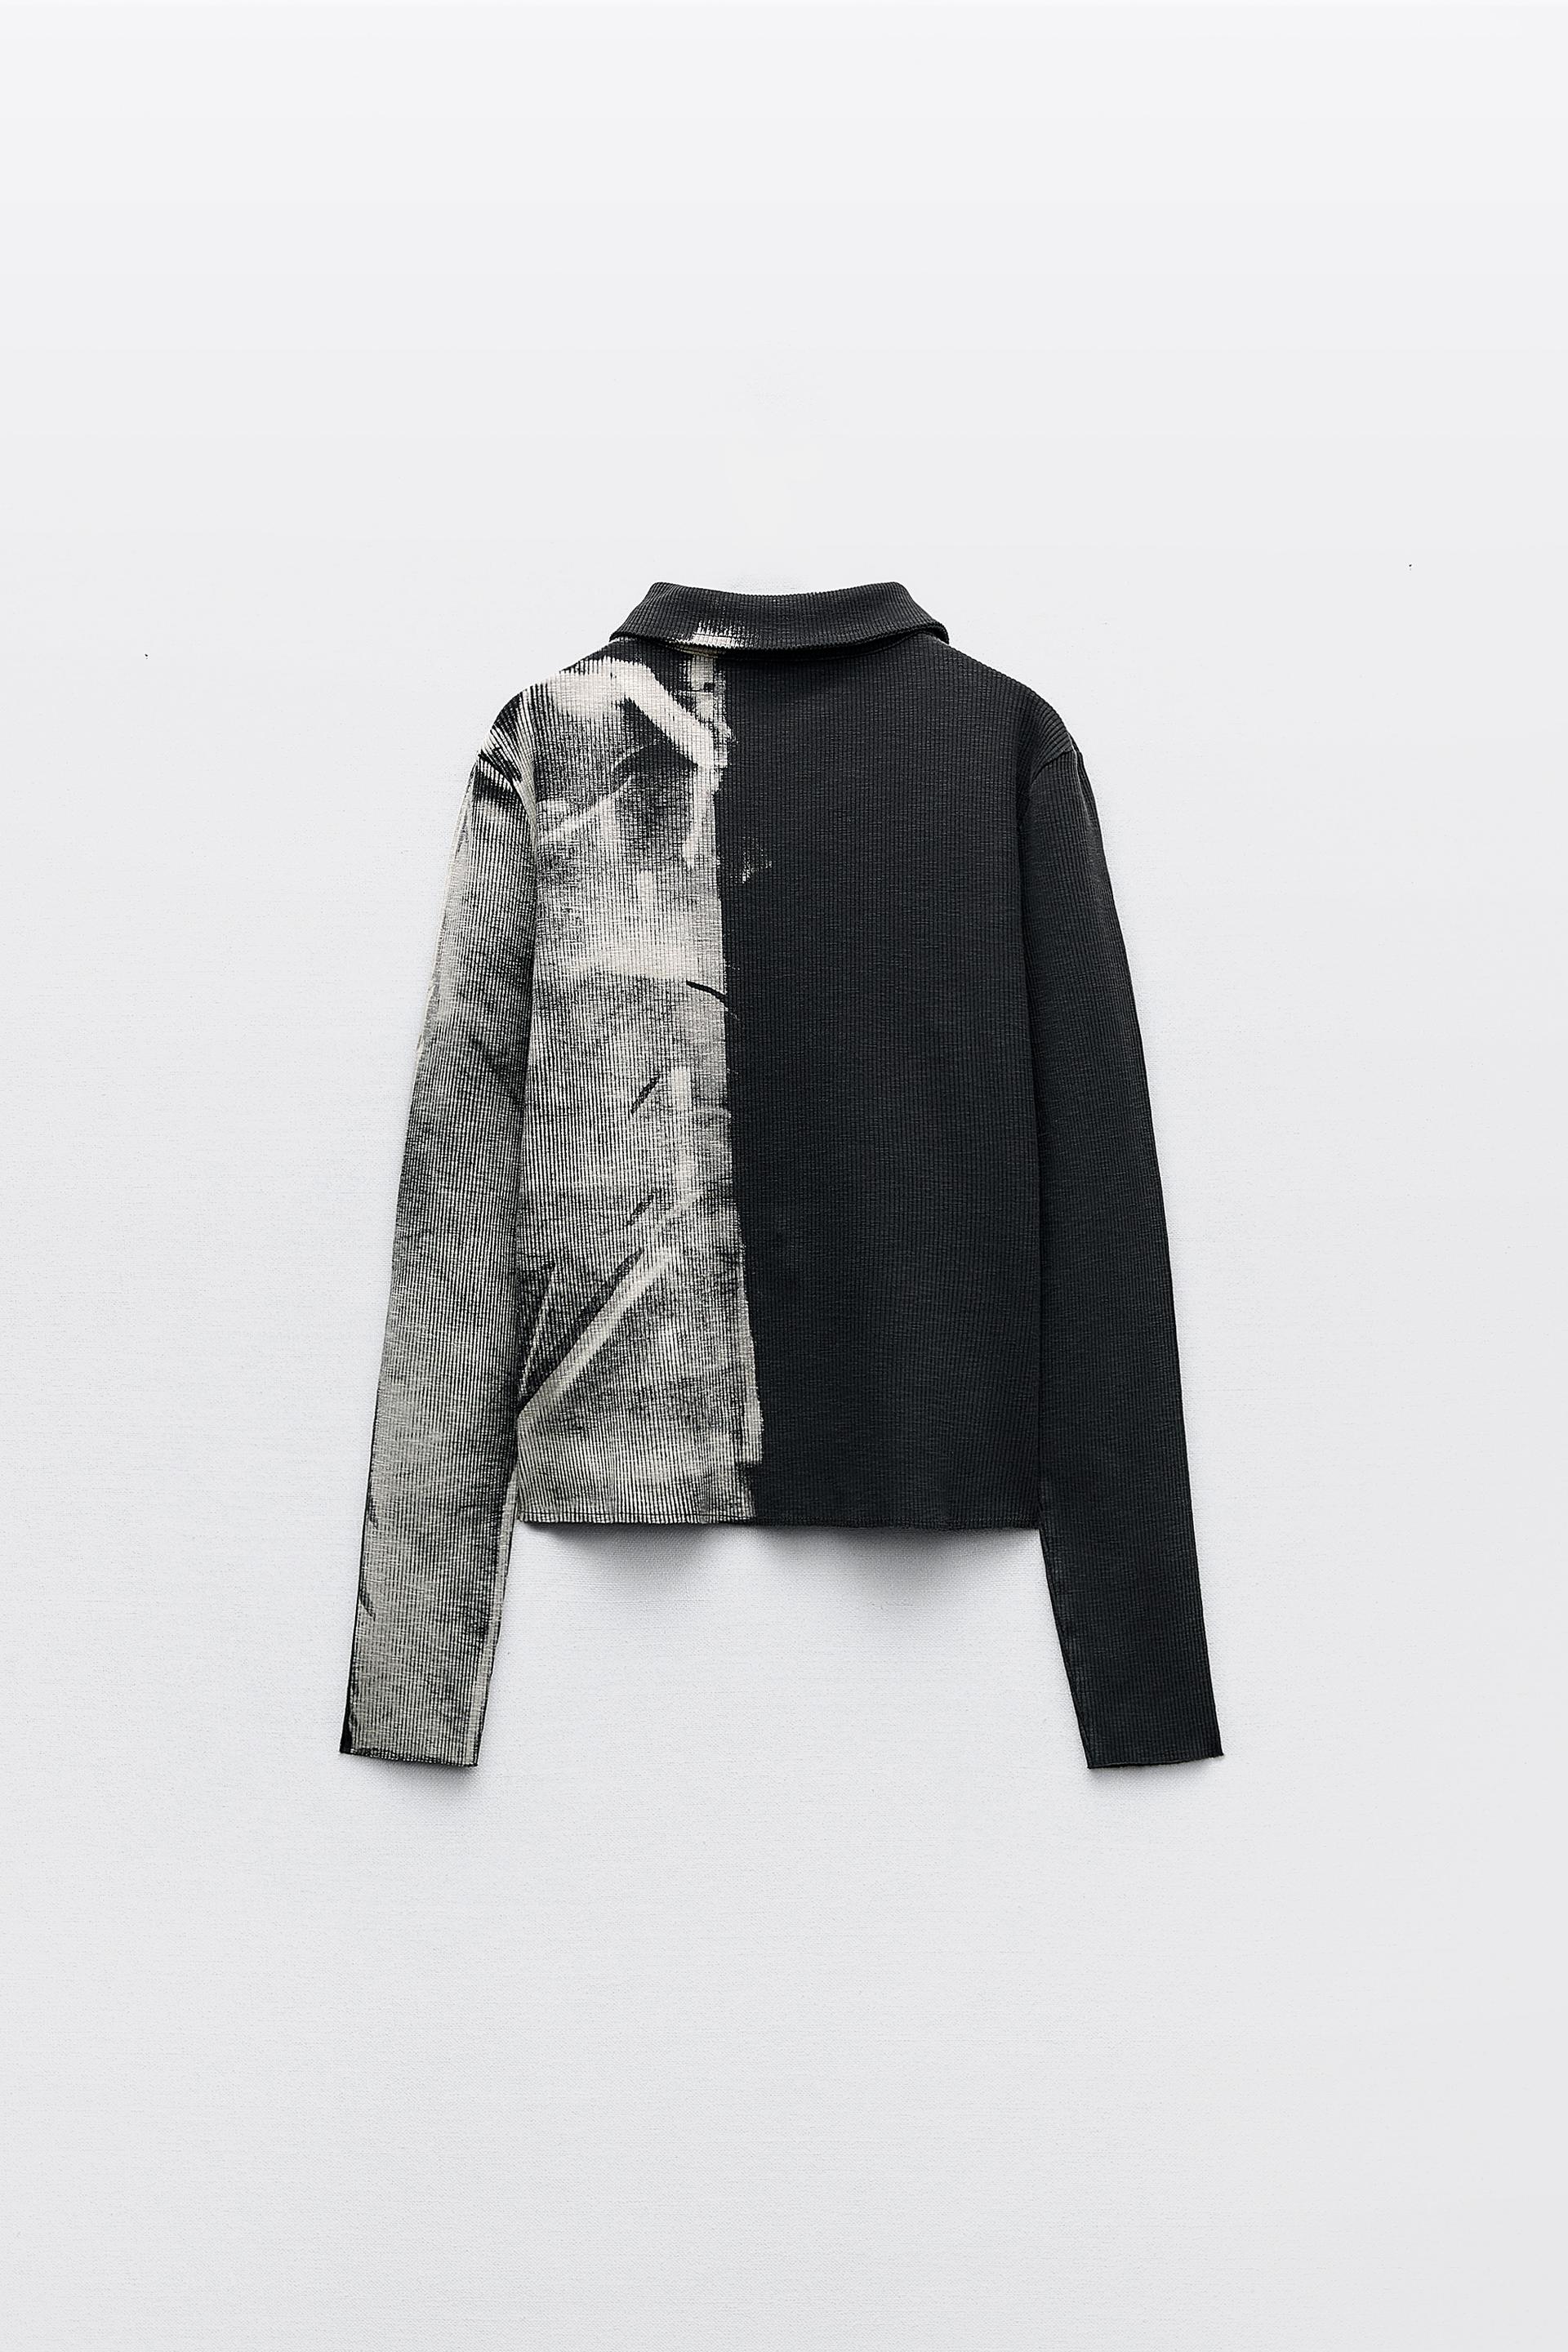 Get yourself this Zara top! - ft InStill in Graphite Grey